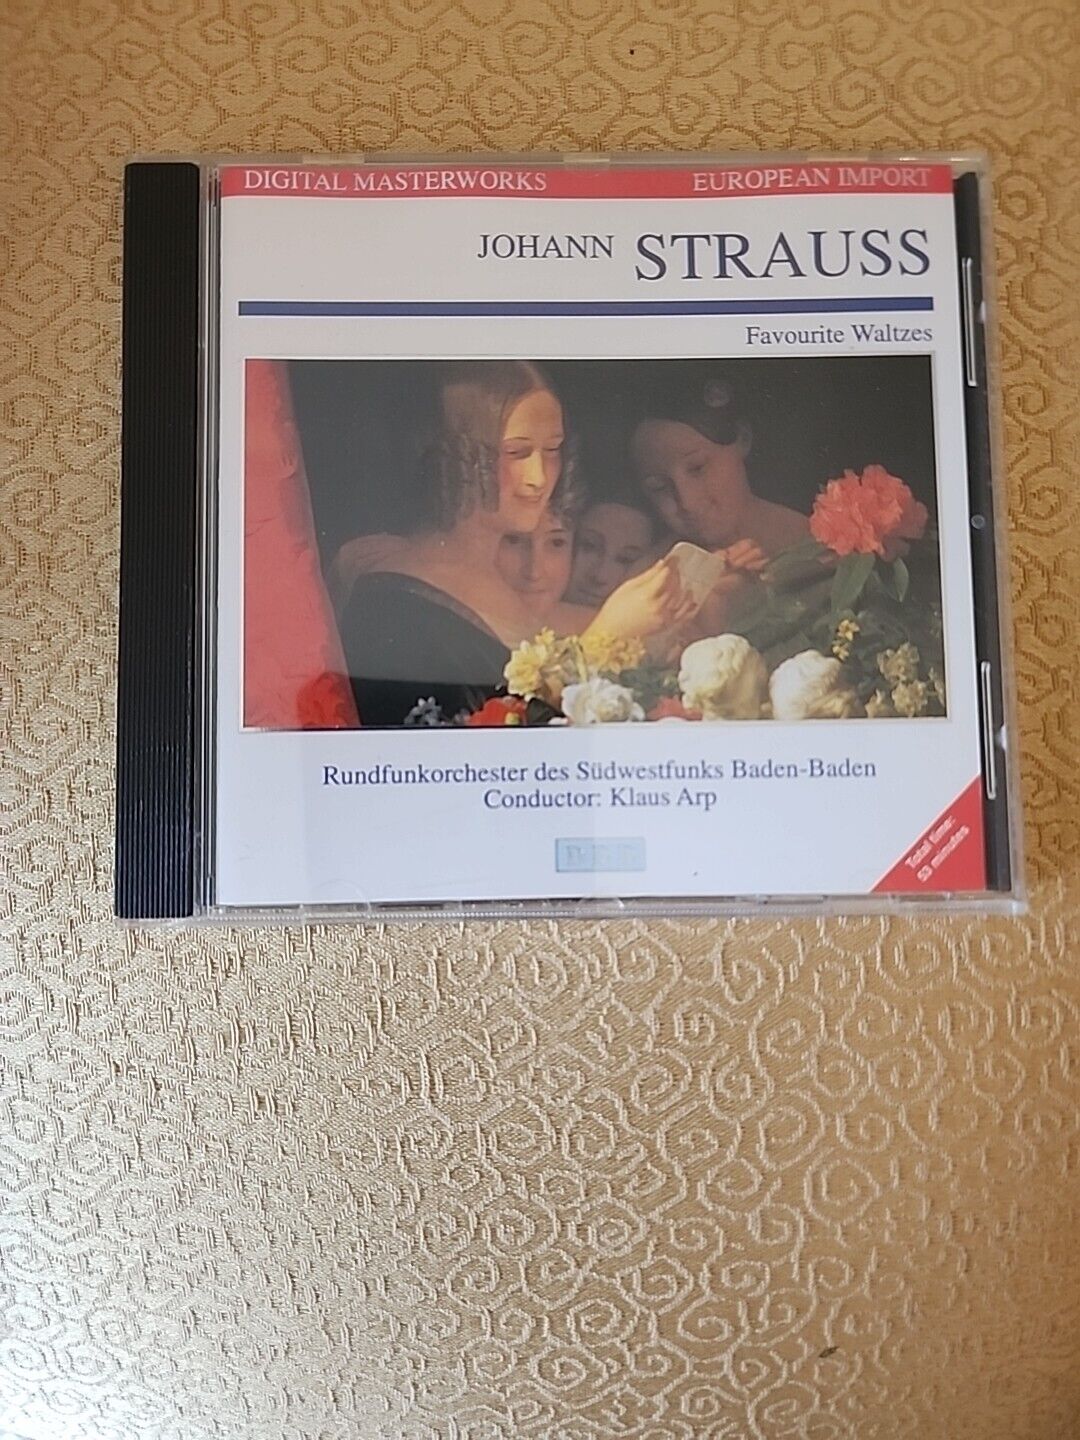 Johann Strauss Favourite Waltzes - Audio CD By Johann Strauss - VERY GOOD